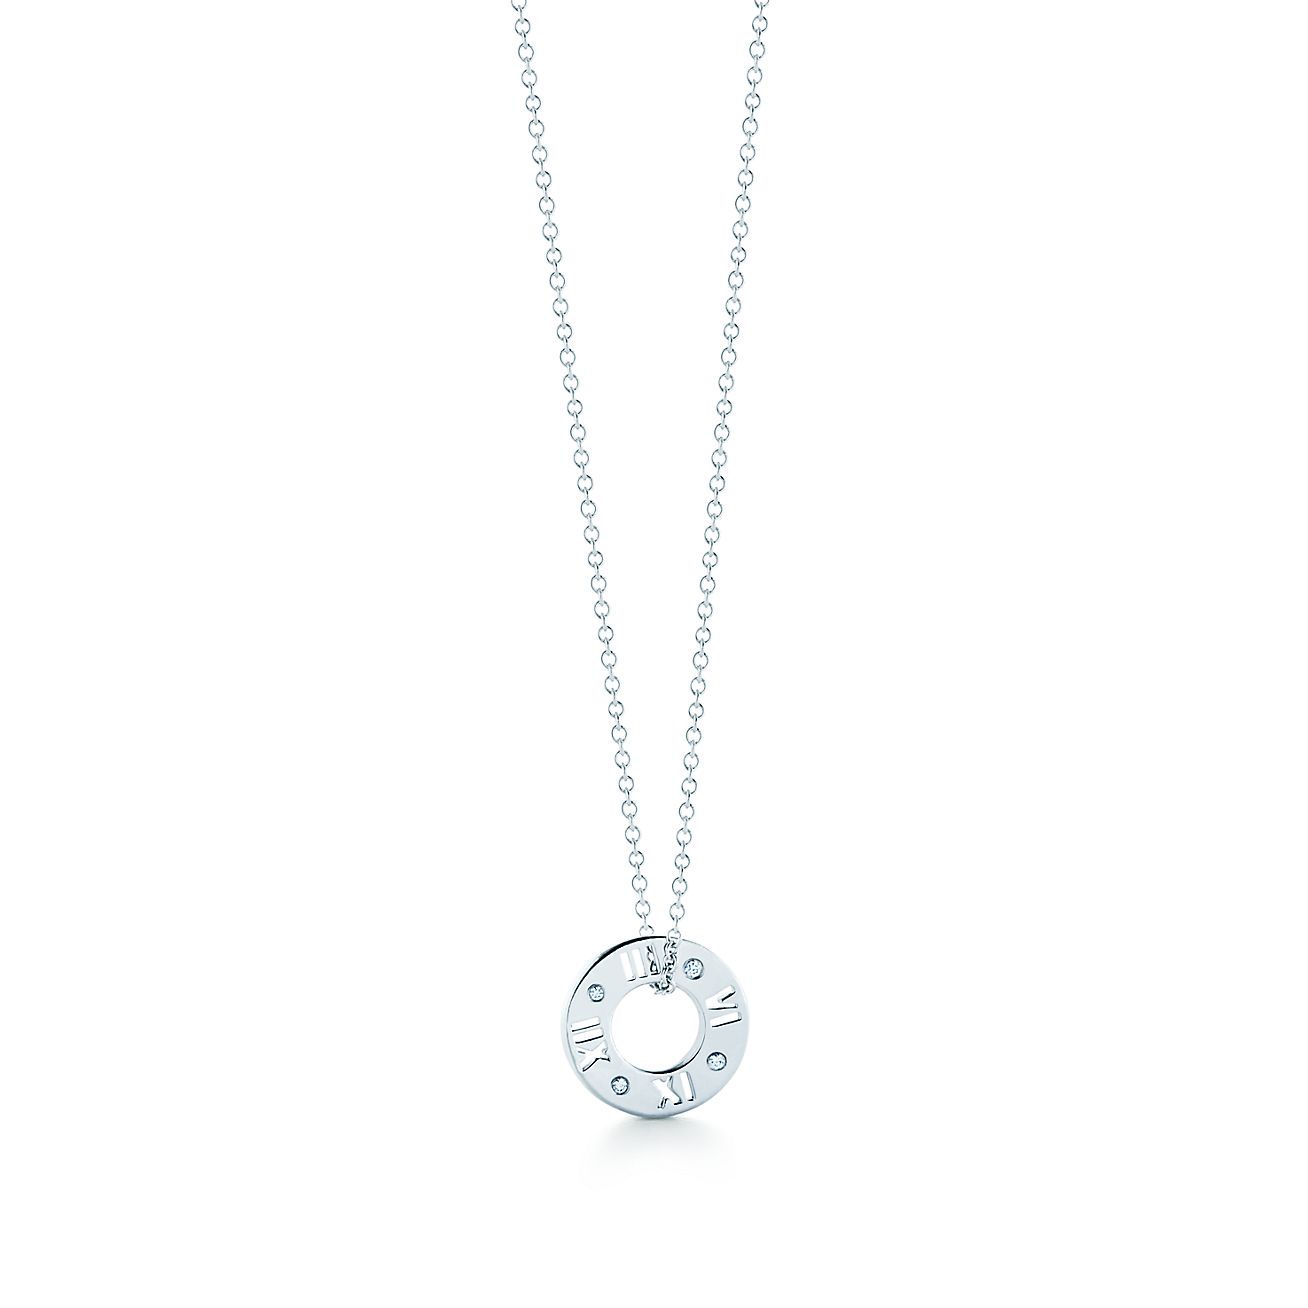 Atlas™ pierced pendant in 18k white 